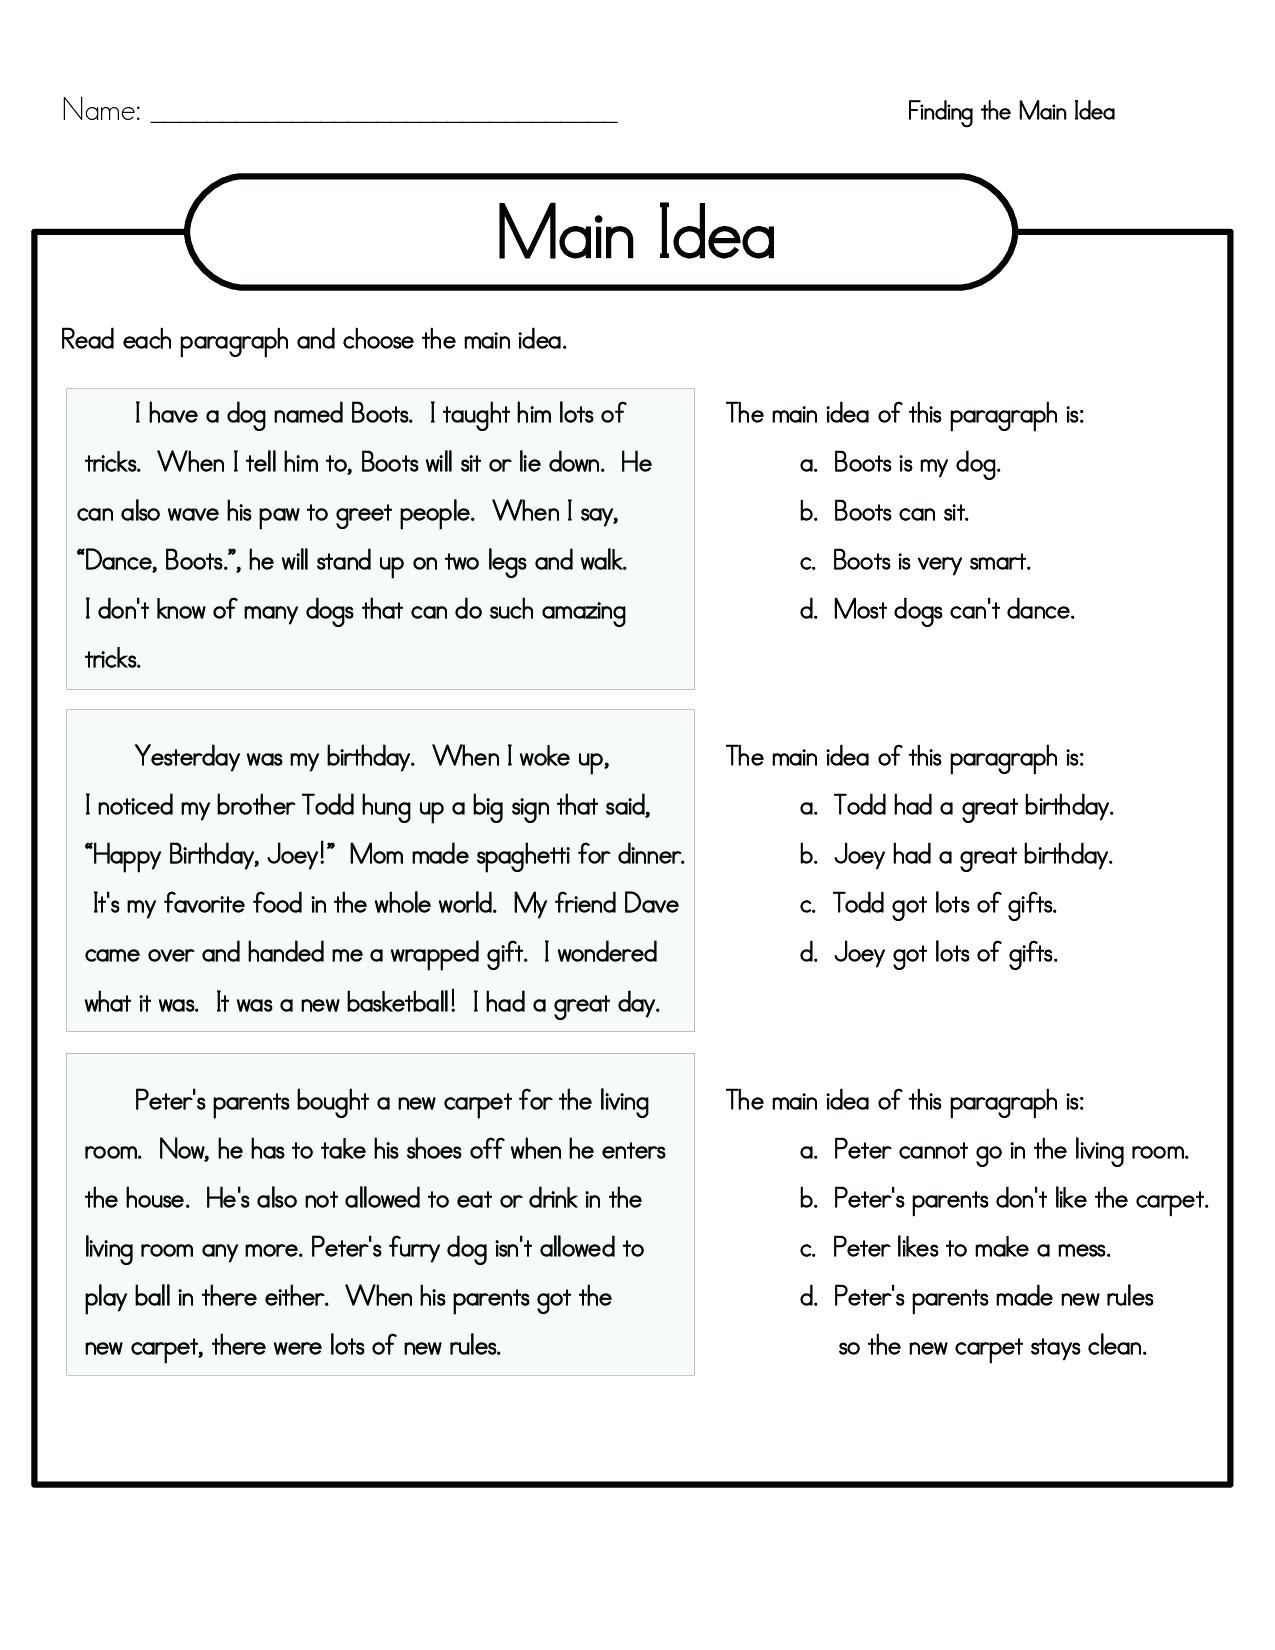 main-idea-worksheet-11th-grade